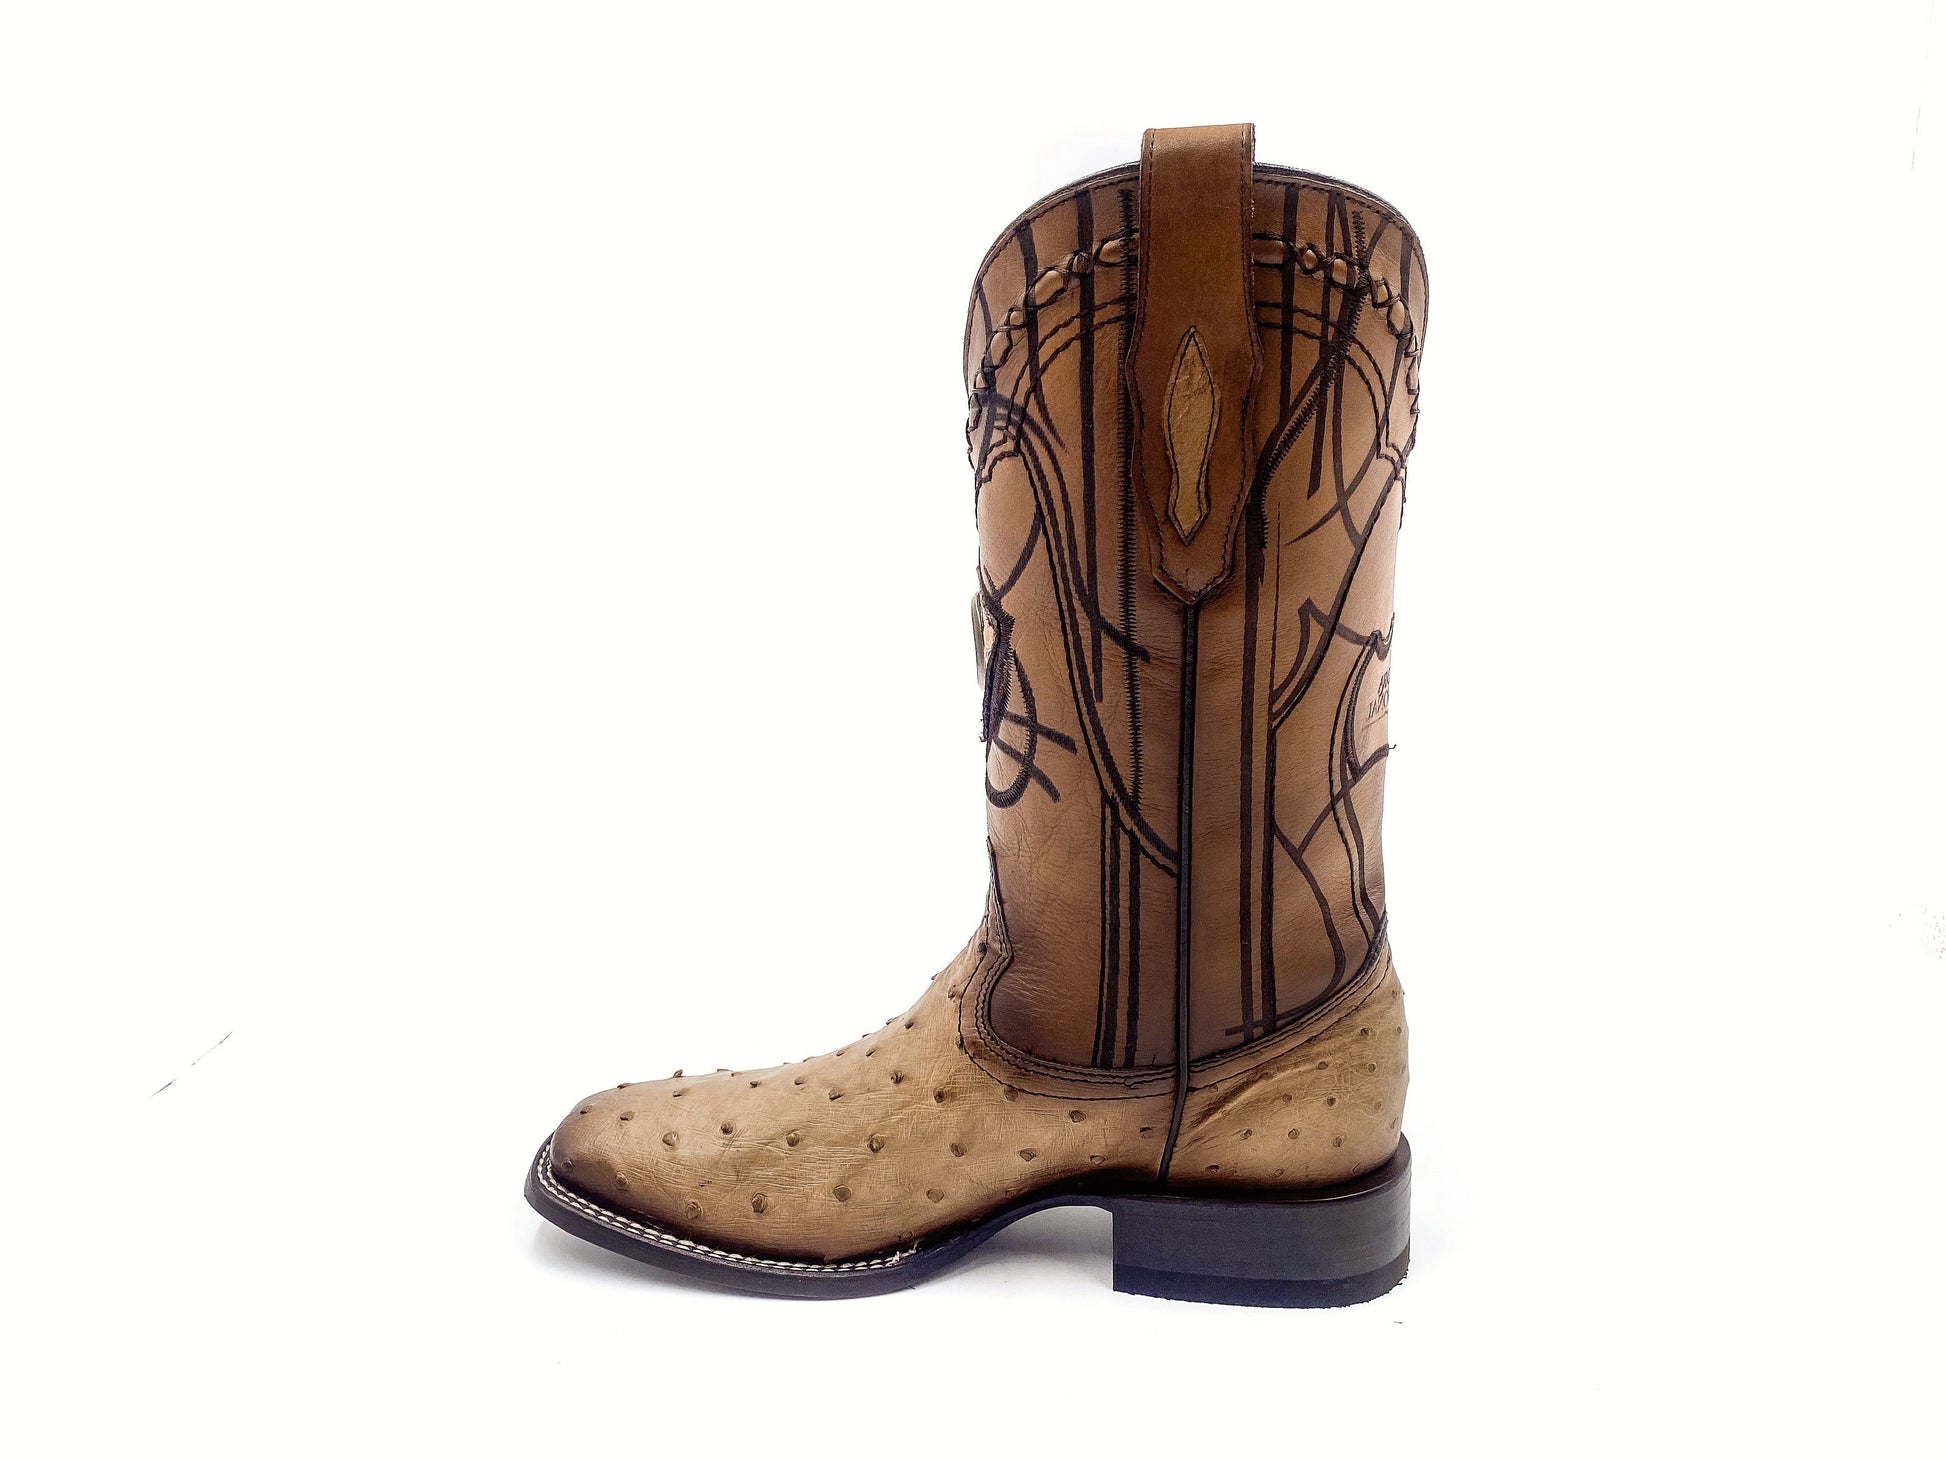 3Z1OA1 - Cuadra orix classic cowboy rodeo ostrich leather boots for men-Kuet.us